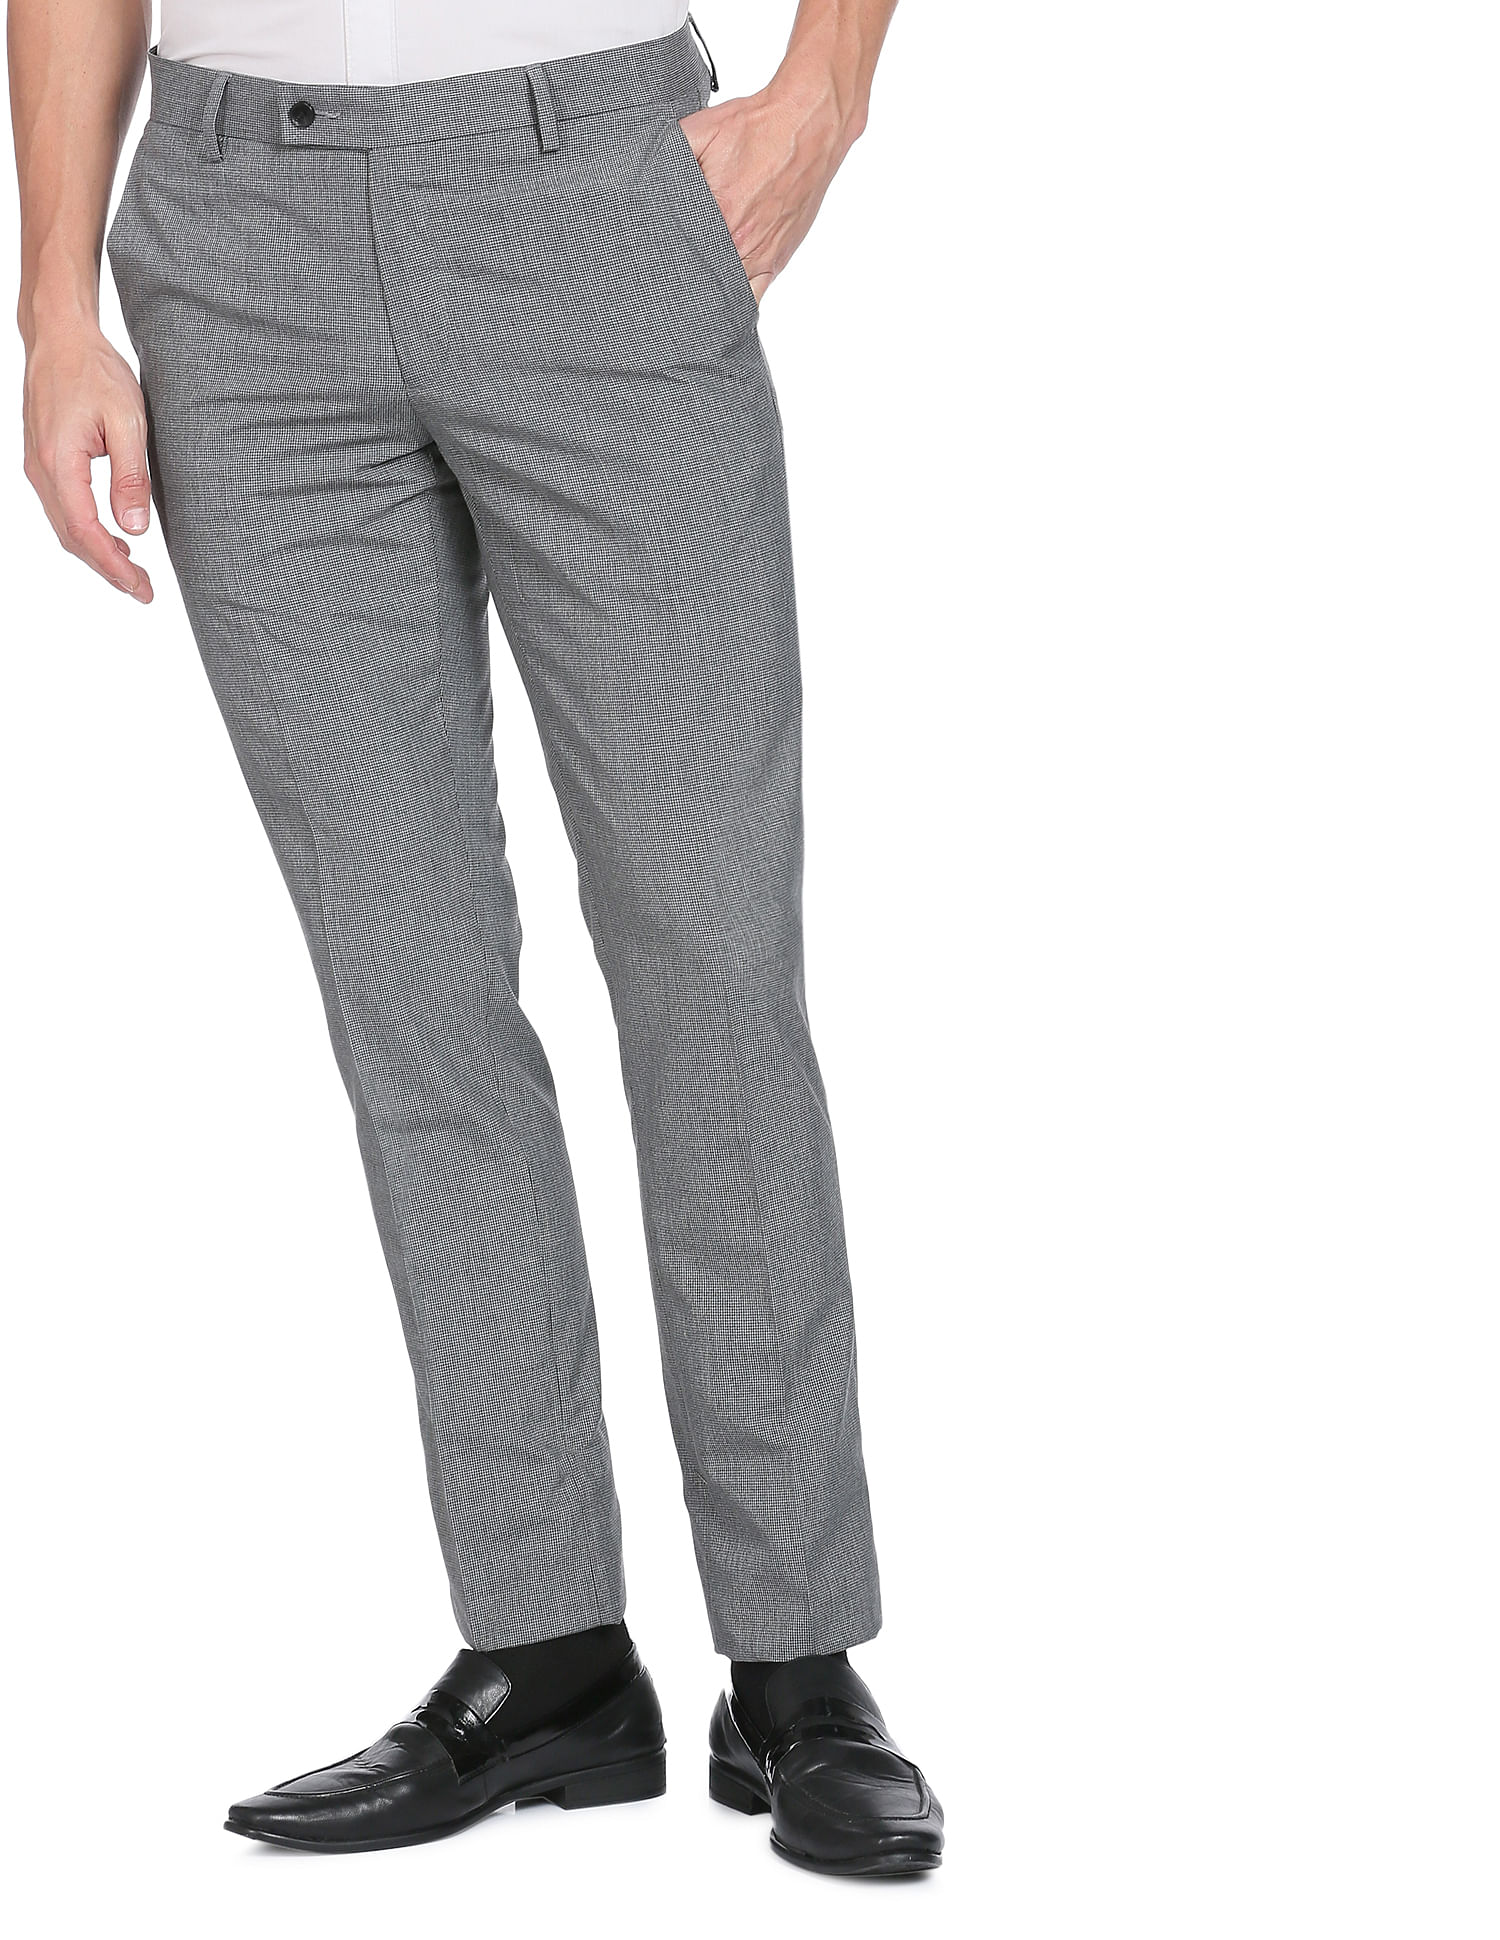 ELANHOOD Men's Regular Fit Formal Trousers/Pant at Rs 2355 | Suit trousers,  Business slacks, Formal slacks, Chinos Set, Men Khaki Set - Firm Buy, New  Delhi | ID: 27354202091